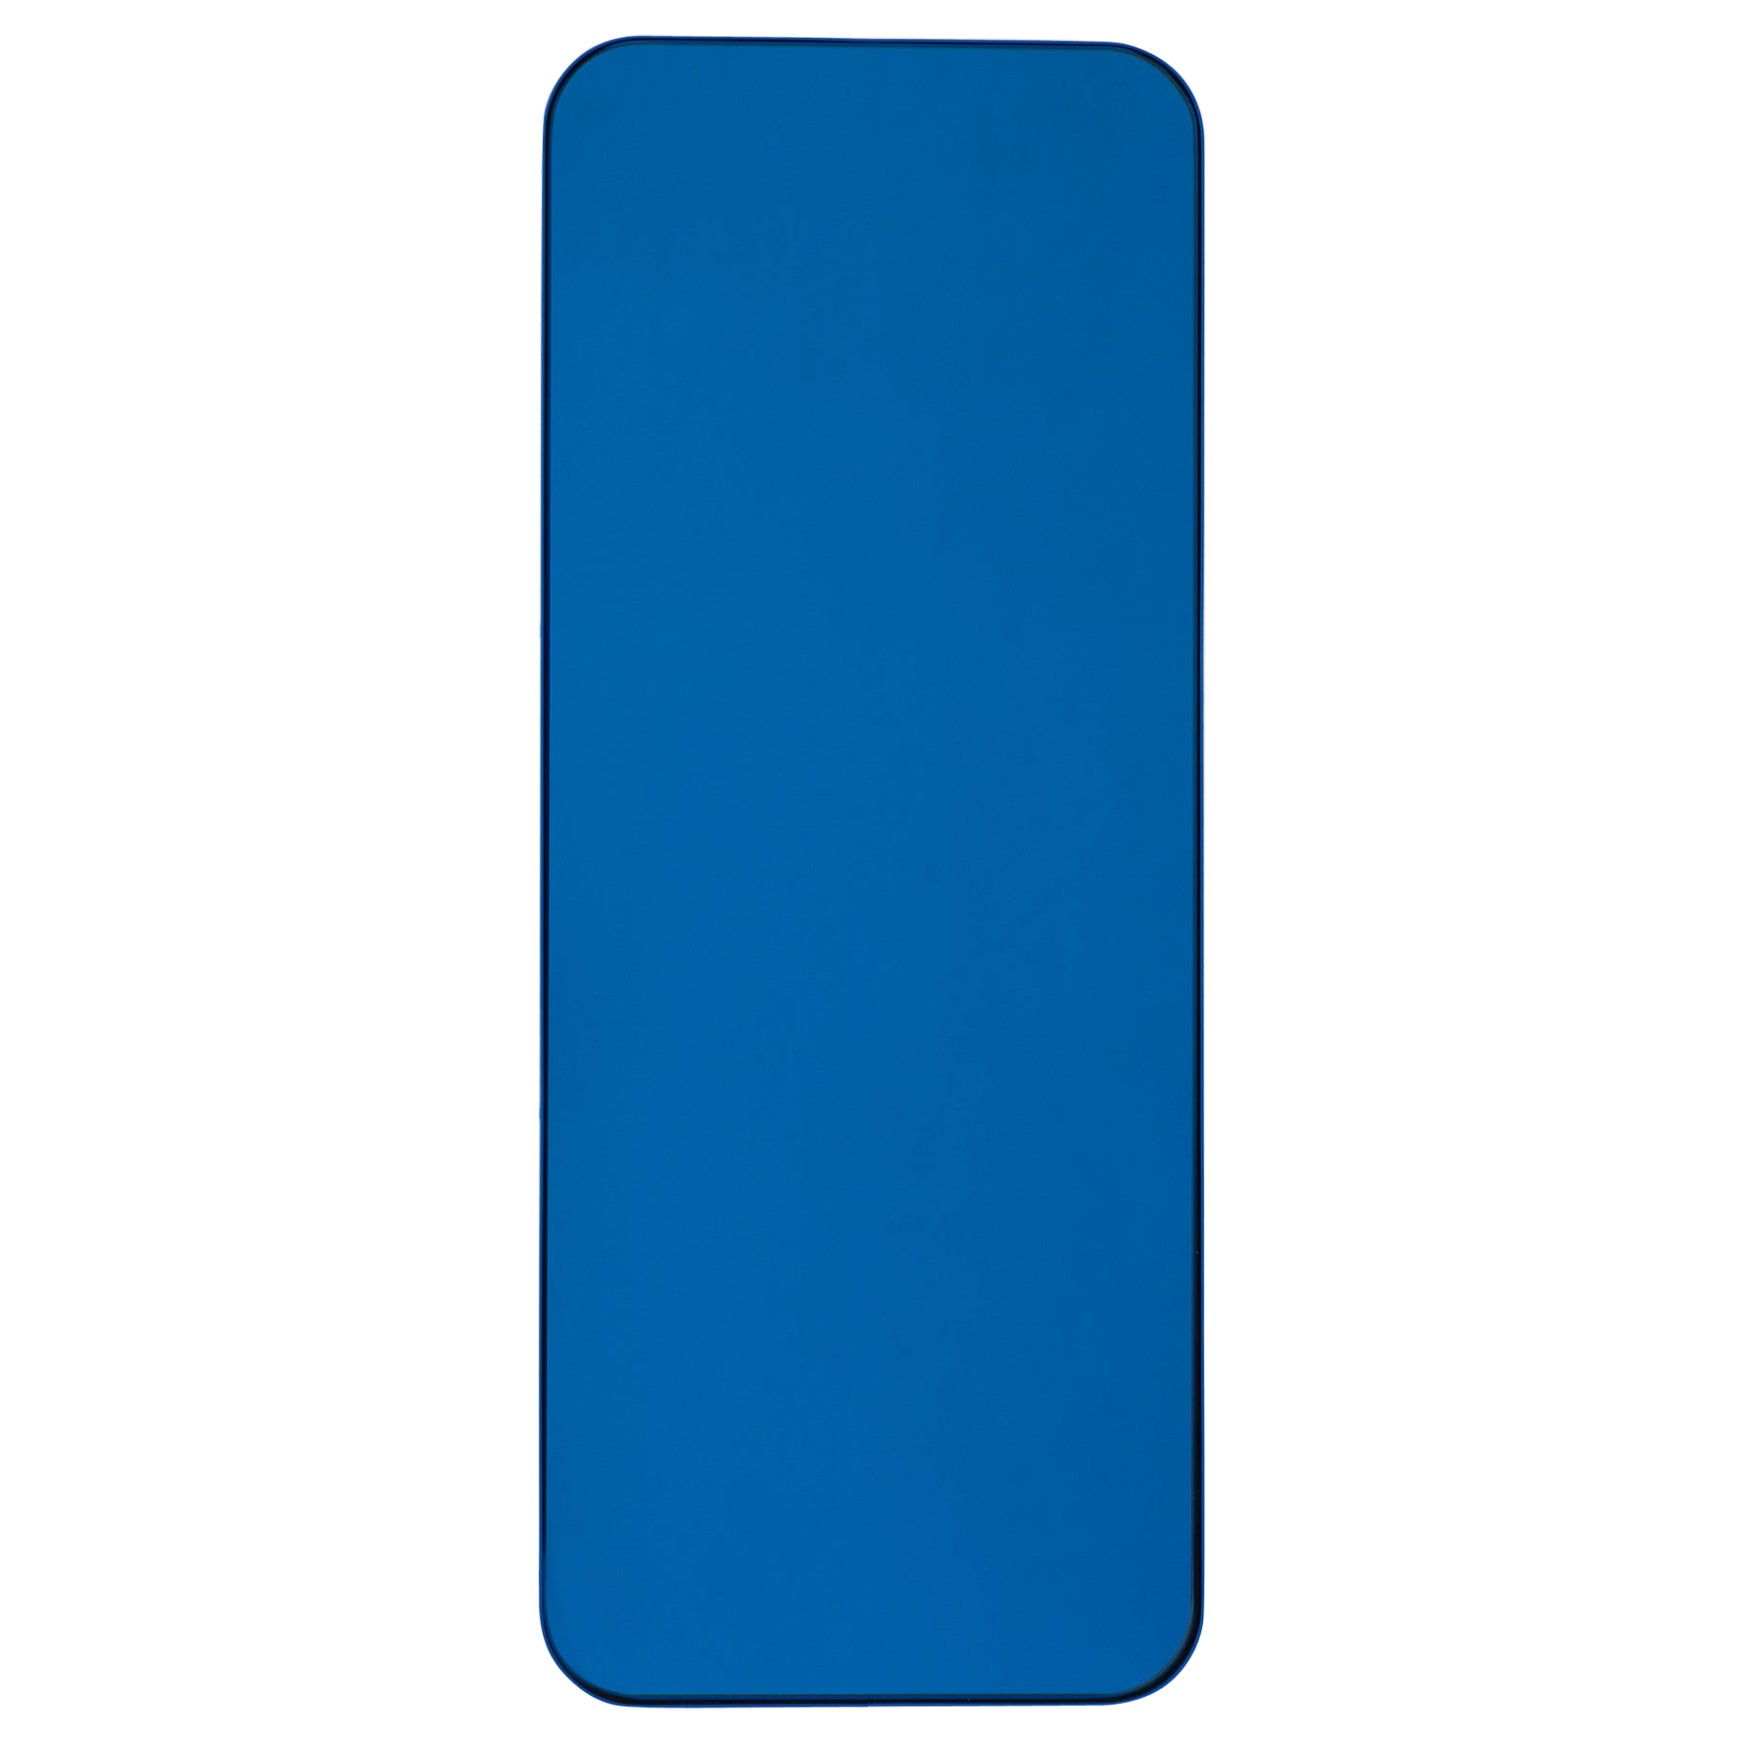 Quadris Rectangular Blue Tinted Mirror with a Blue Frame, Medium